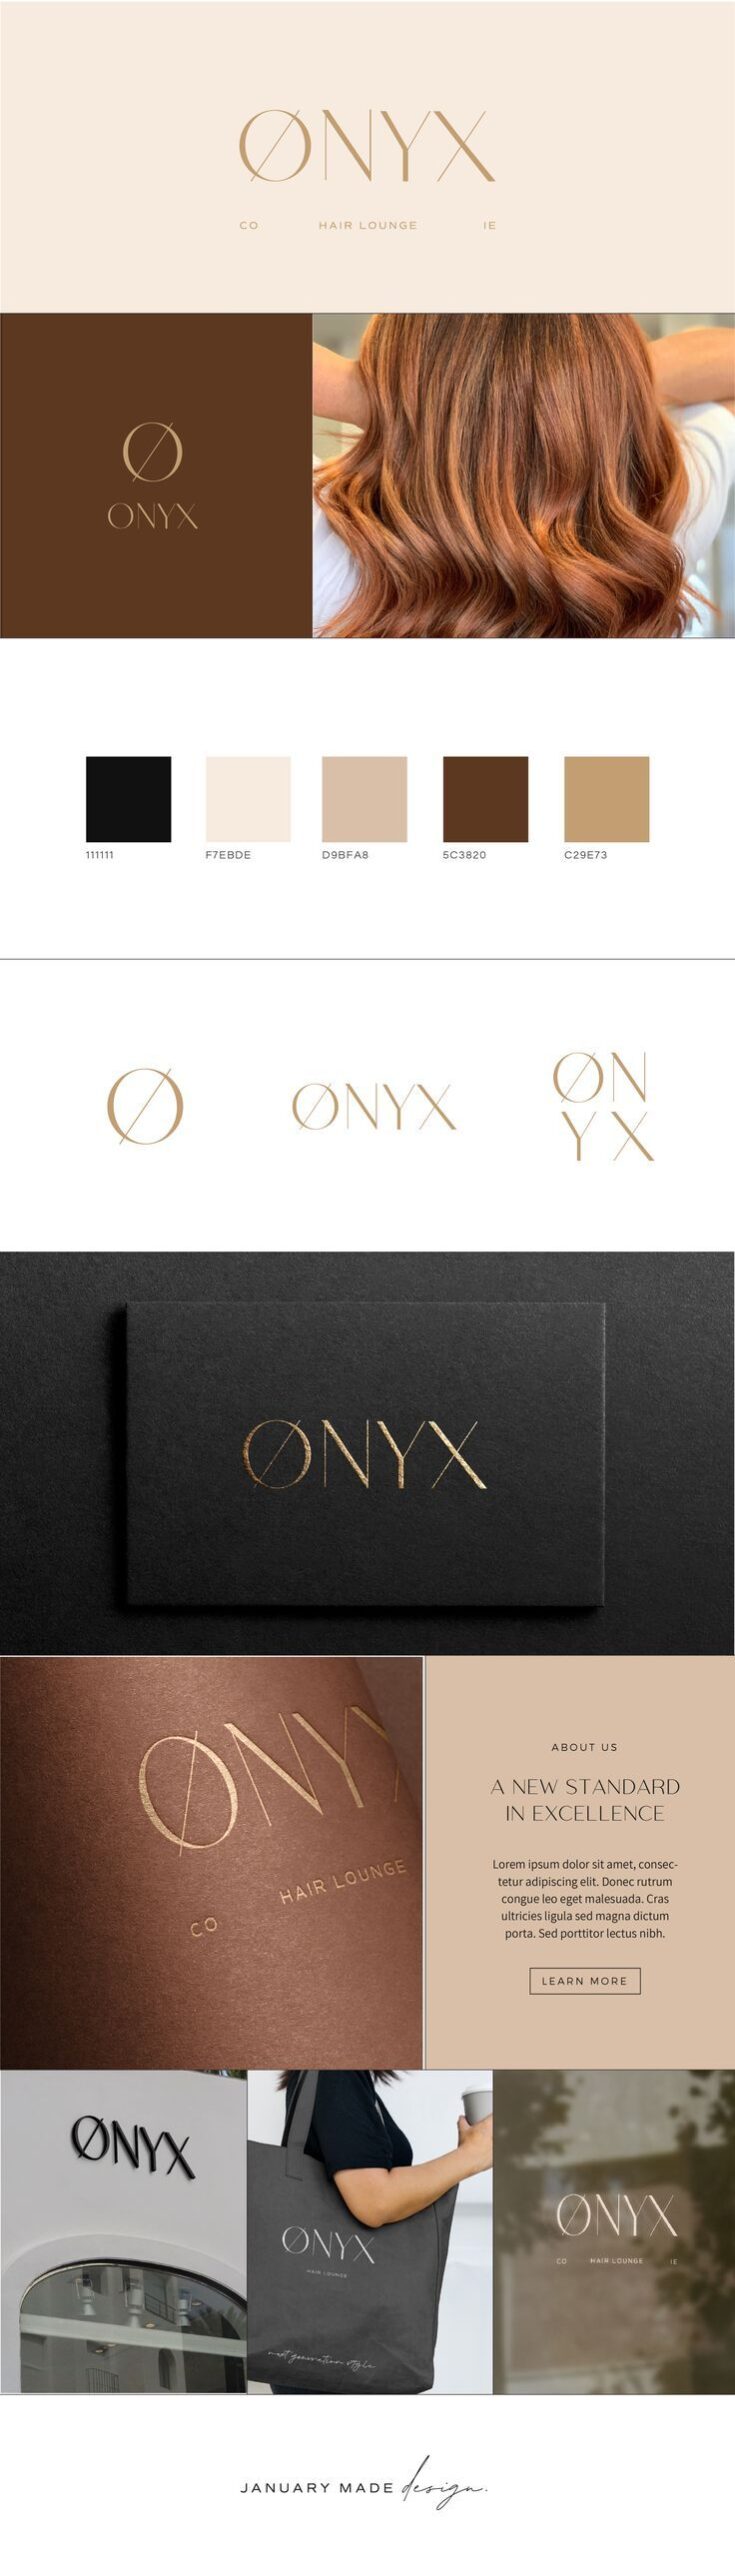 Onyx Hairdressing Logo and Branding